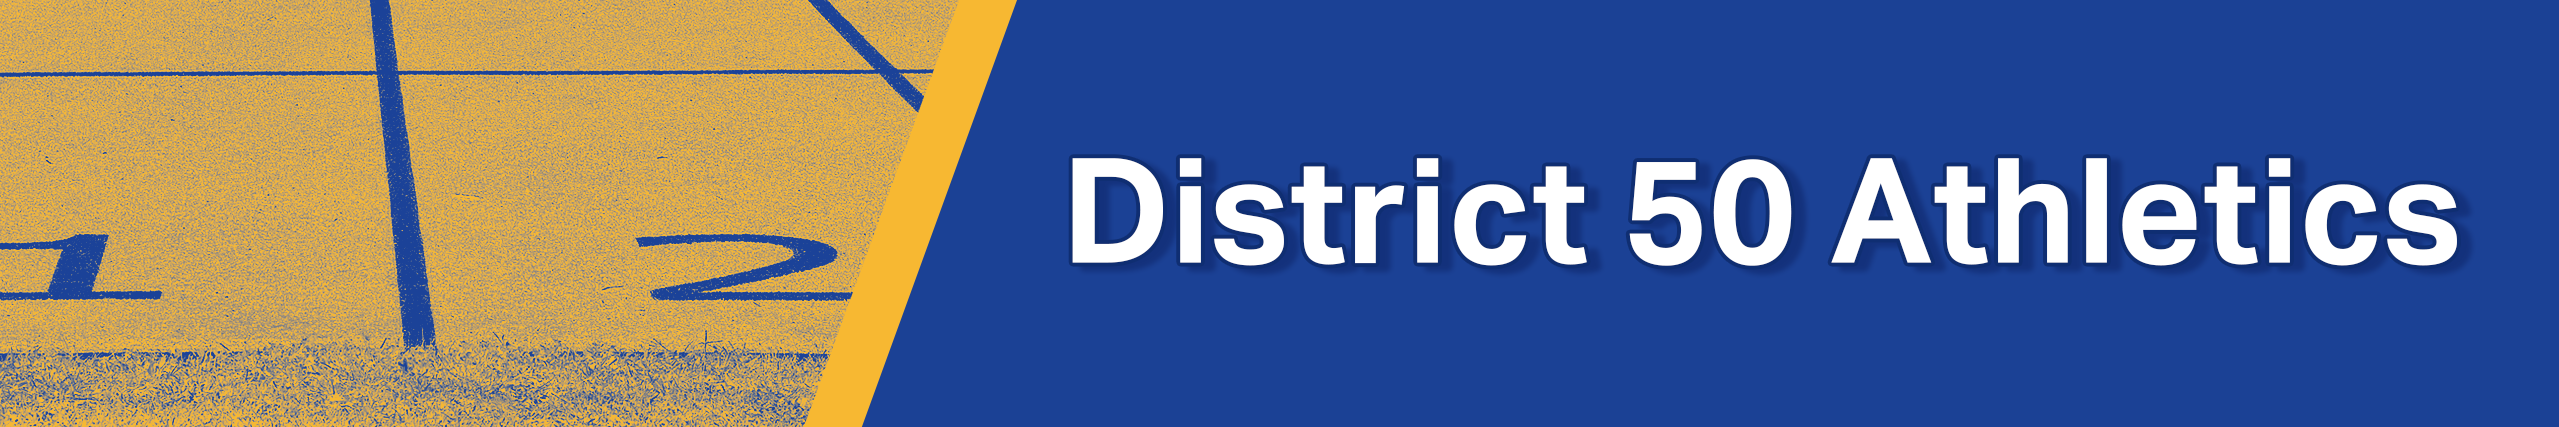 District 50 Athletics